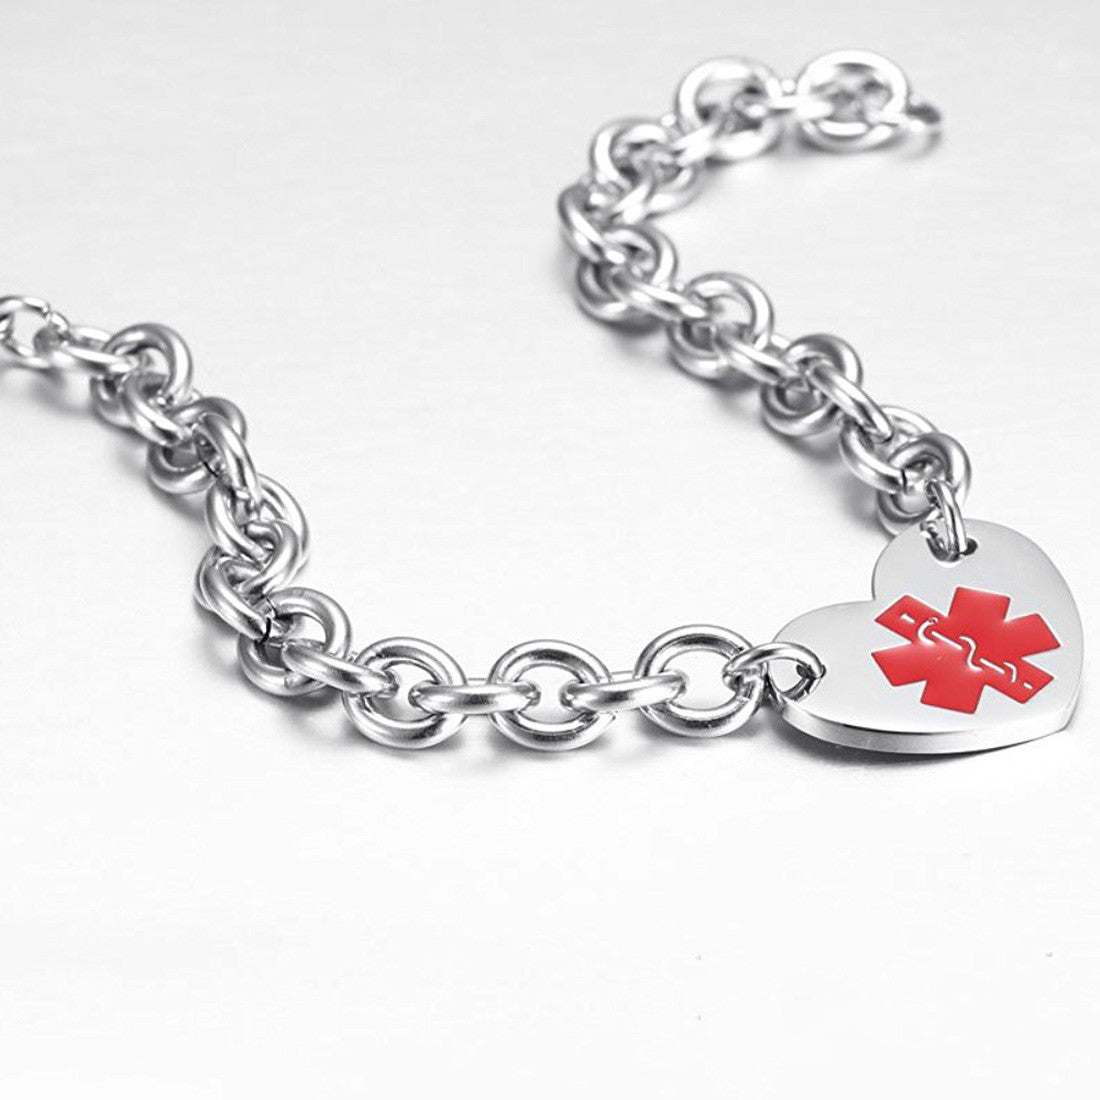 Customized Stainless Steel Medical Alert ID Heart Bracelet Awareness Emergency Alarm Bracelet Chain for Women Girls,8.46'', with Aid Bag